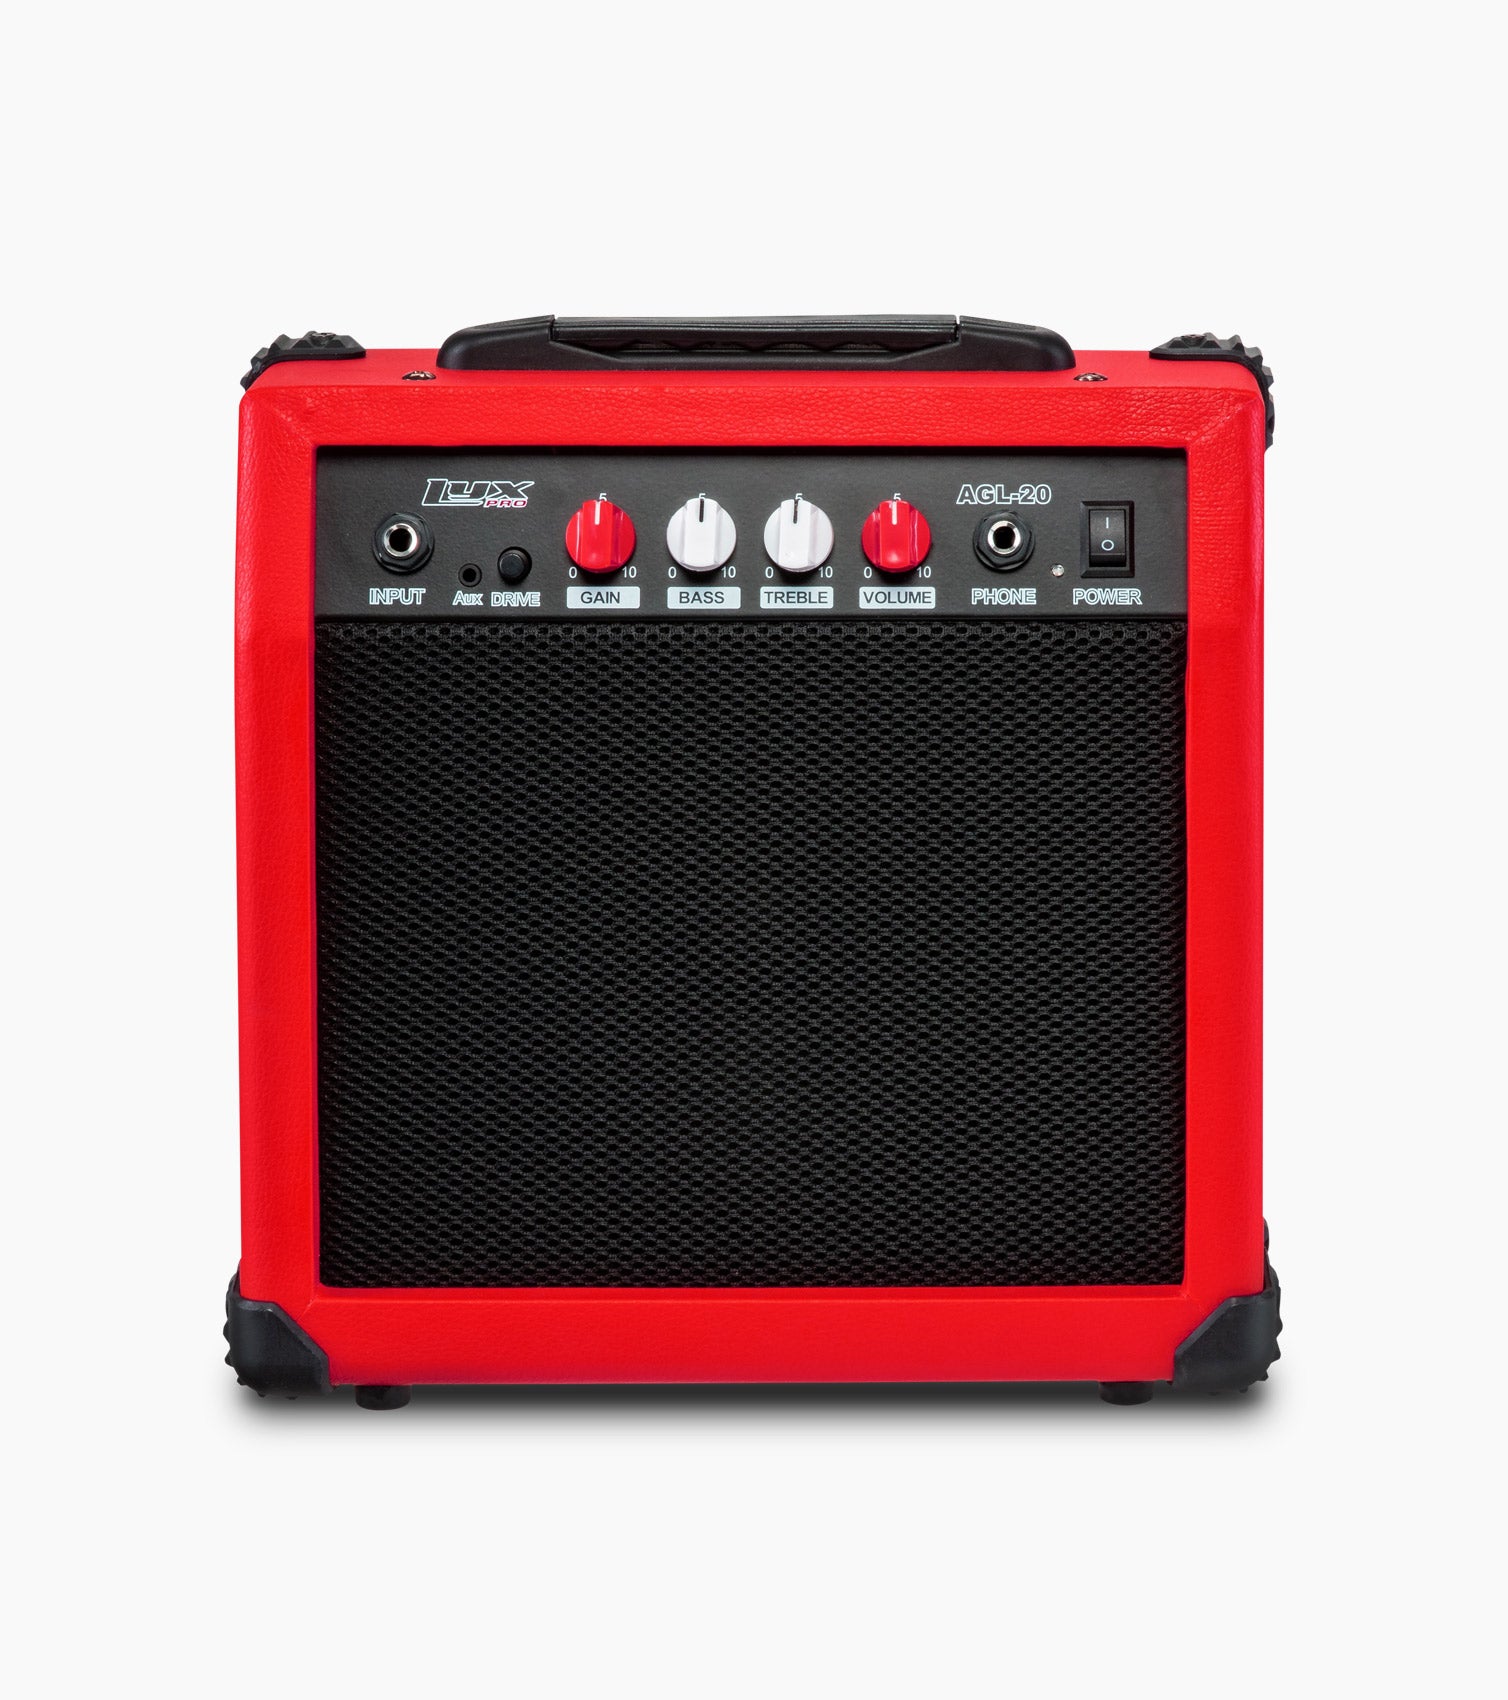  frontal view of red 20 watt electric guitar amplifier 